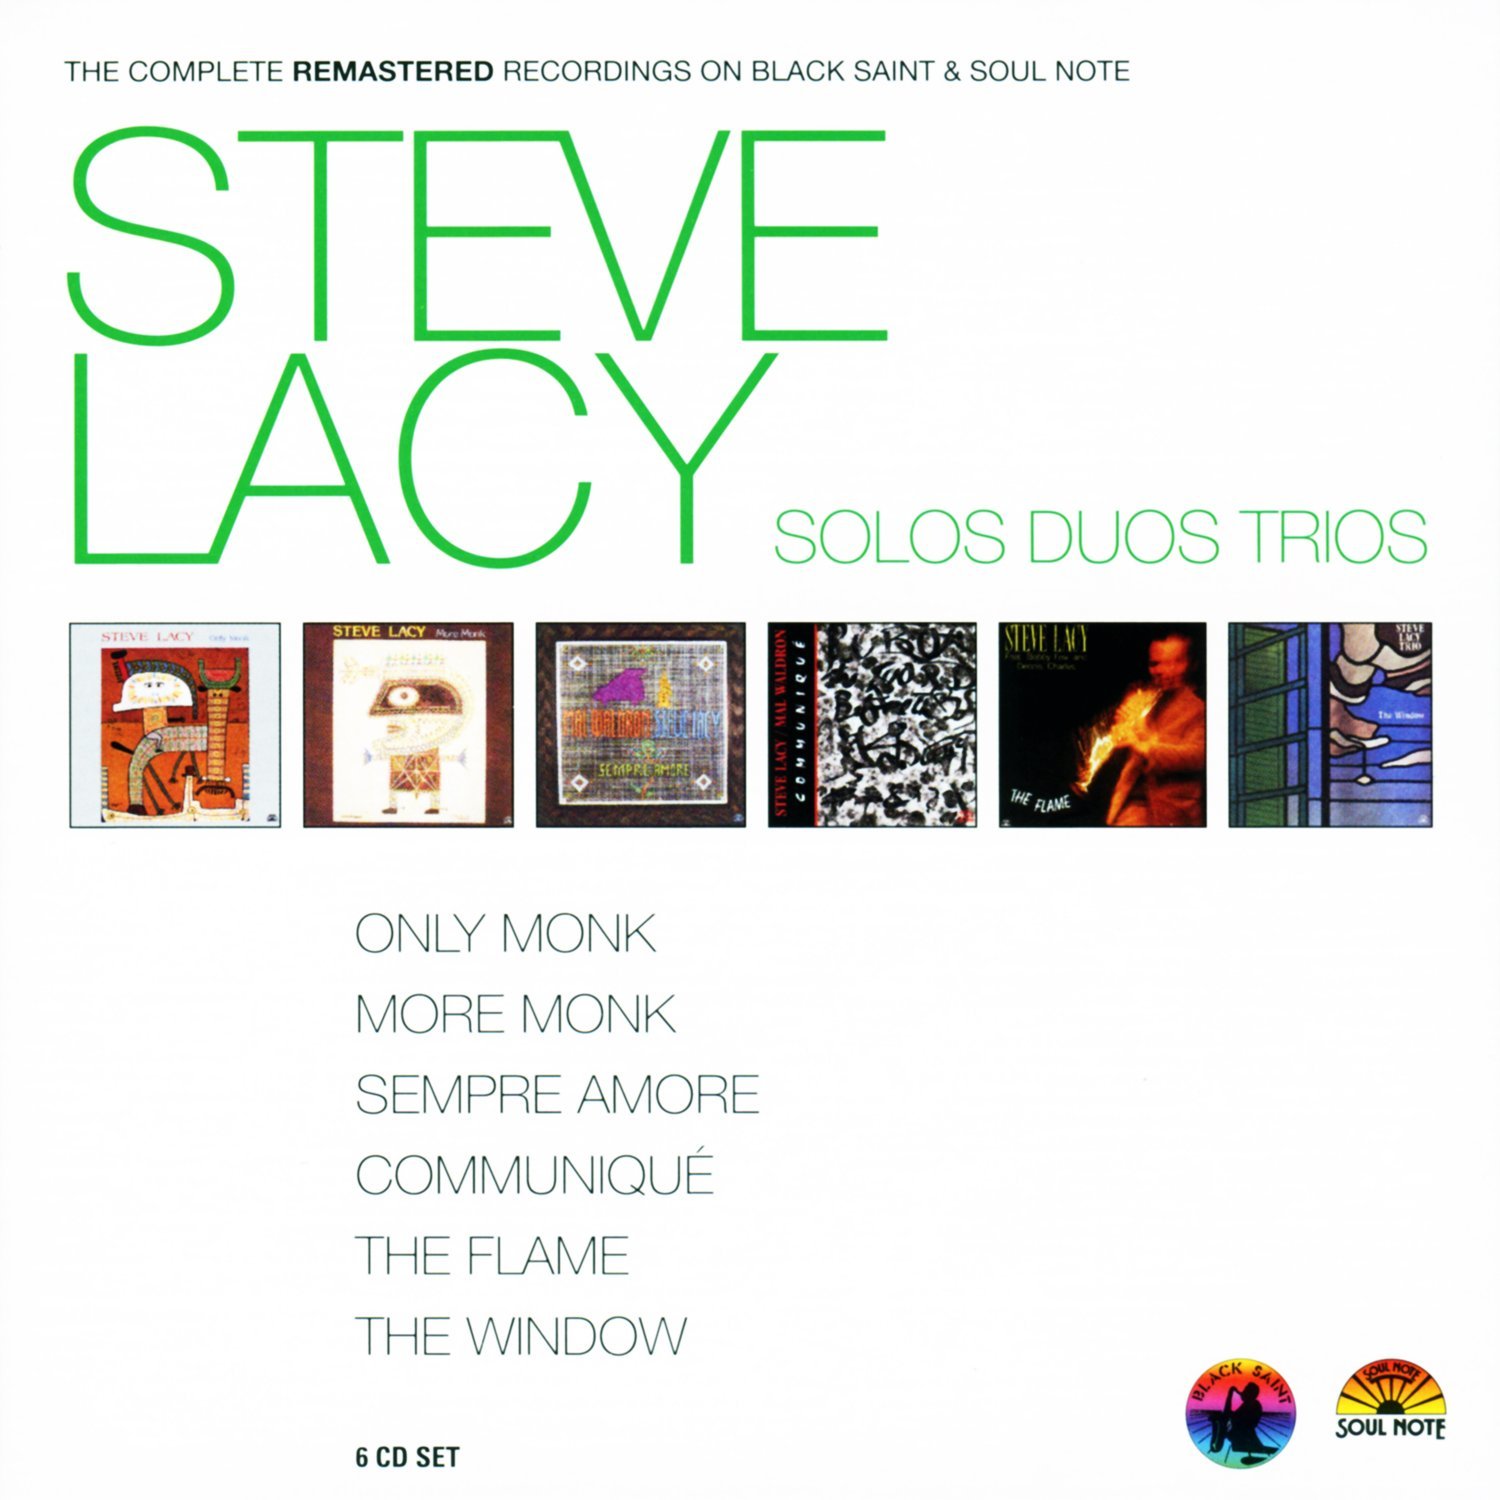 Соло дуо трио. Steve Lacy Jazz. Lacy, Steve "evidence (CD)". Solo Duo Trio. Soul Notes картинки.